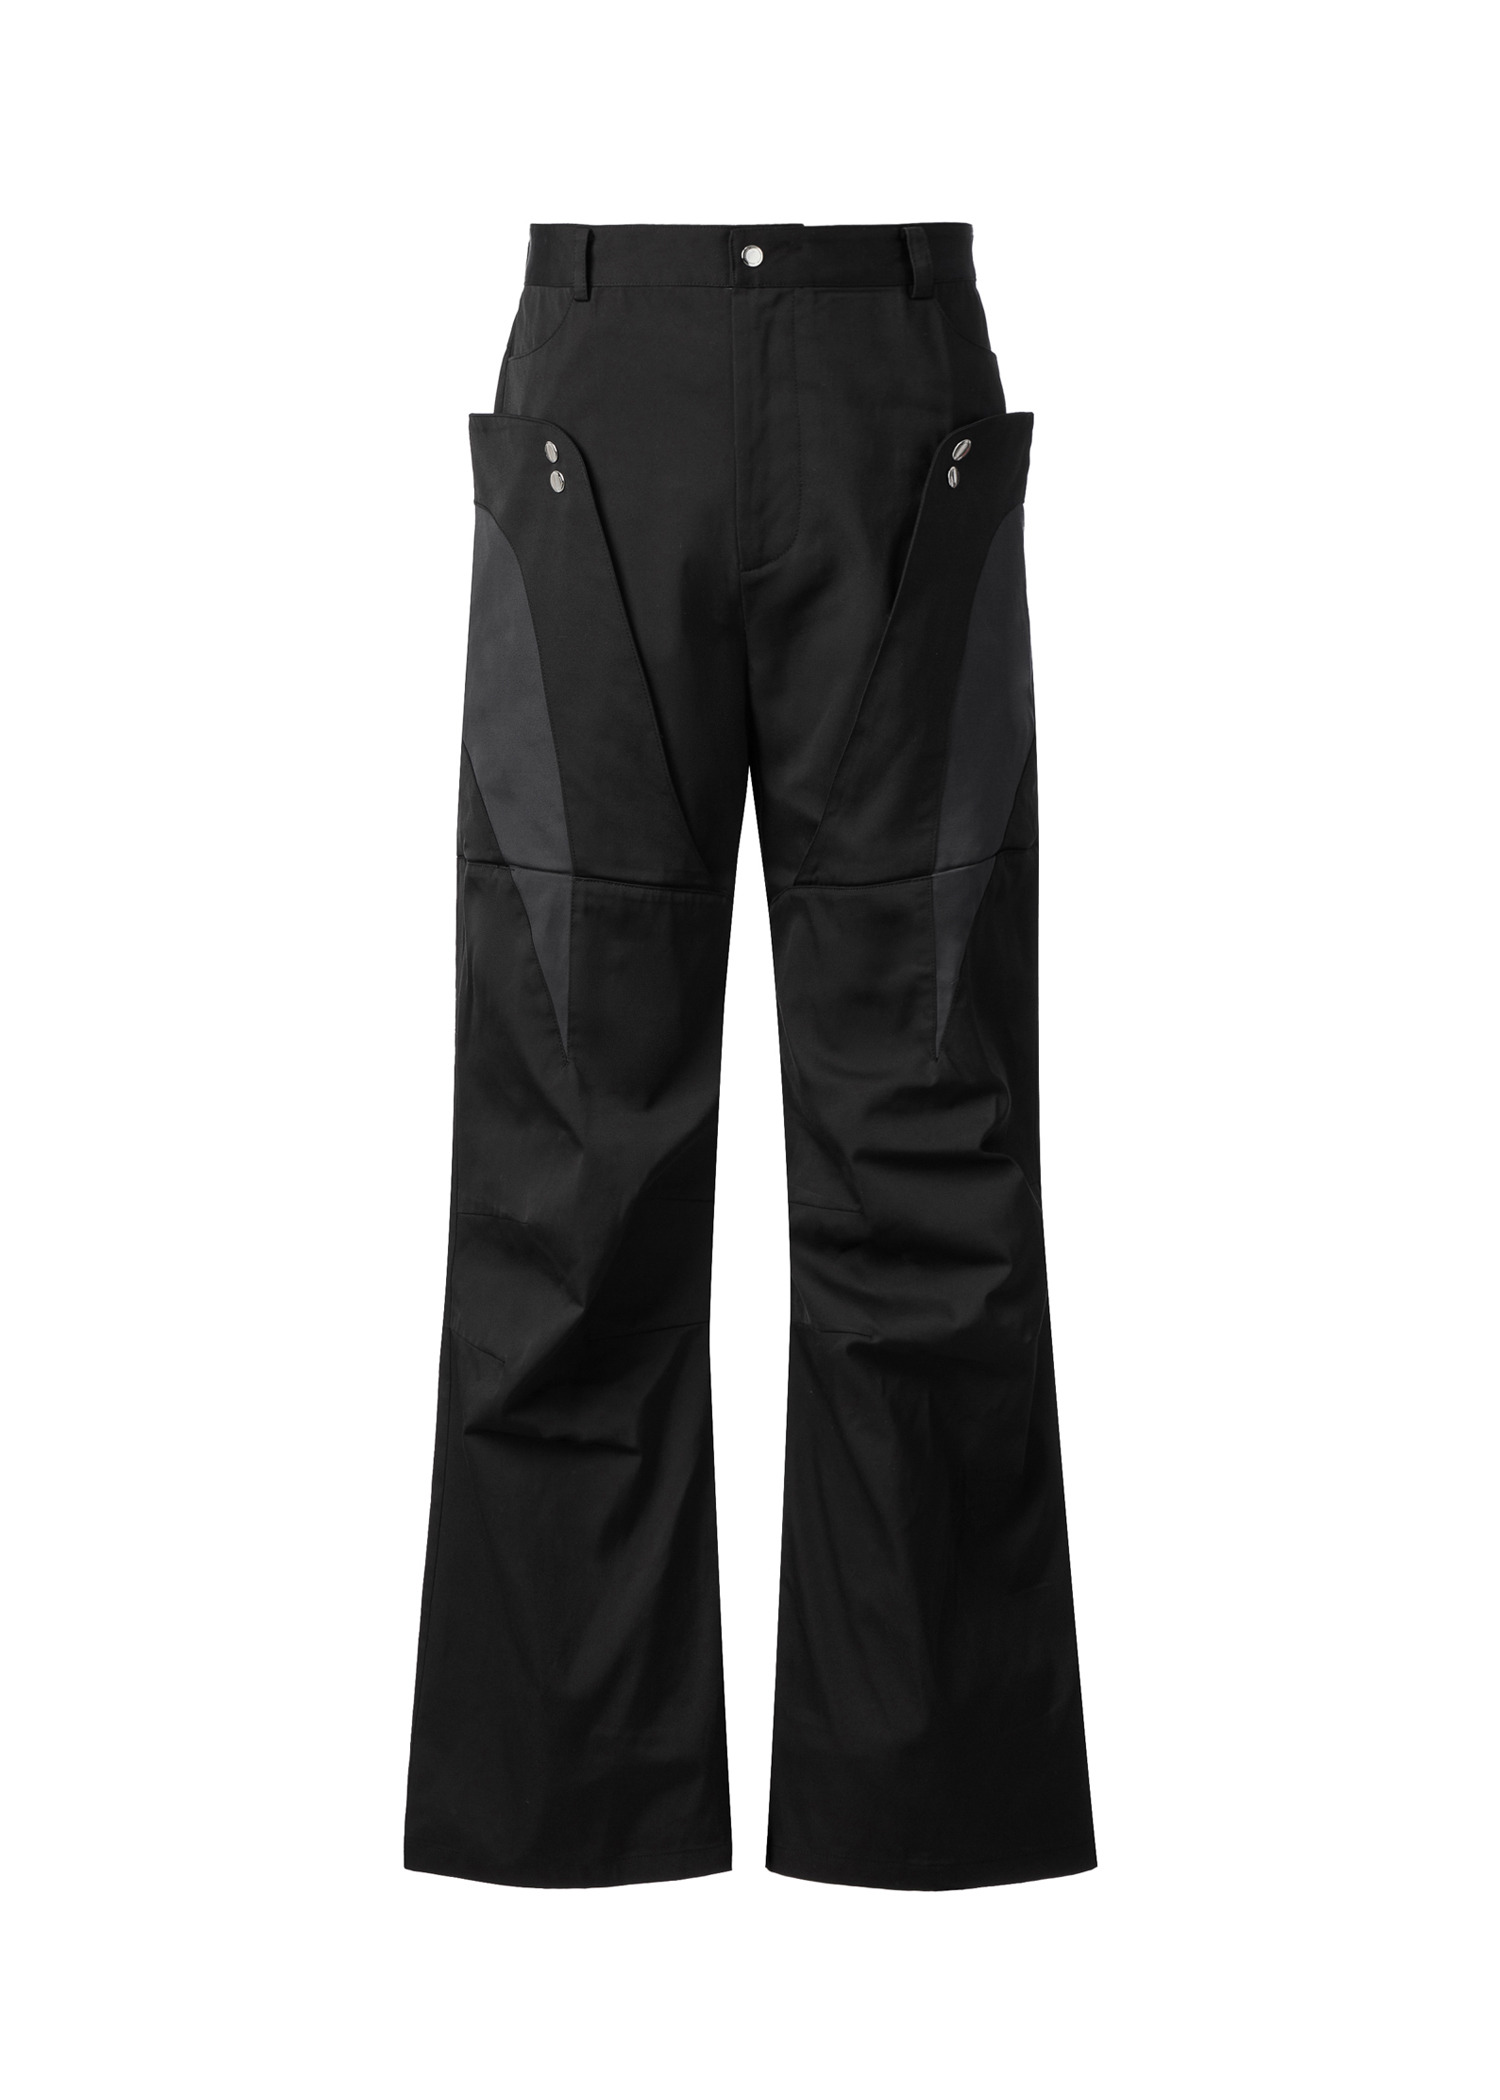 003-23 flap pocket pants - black